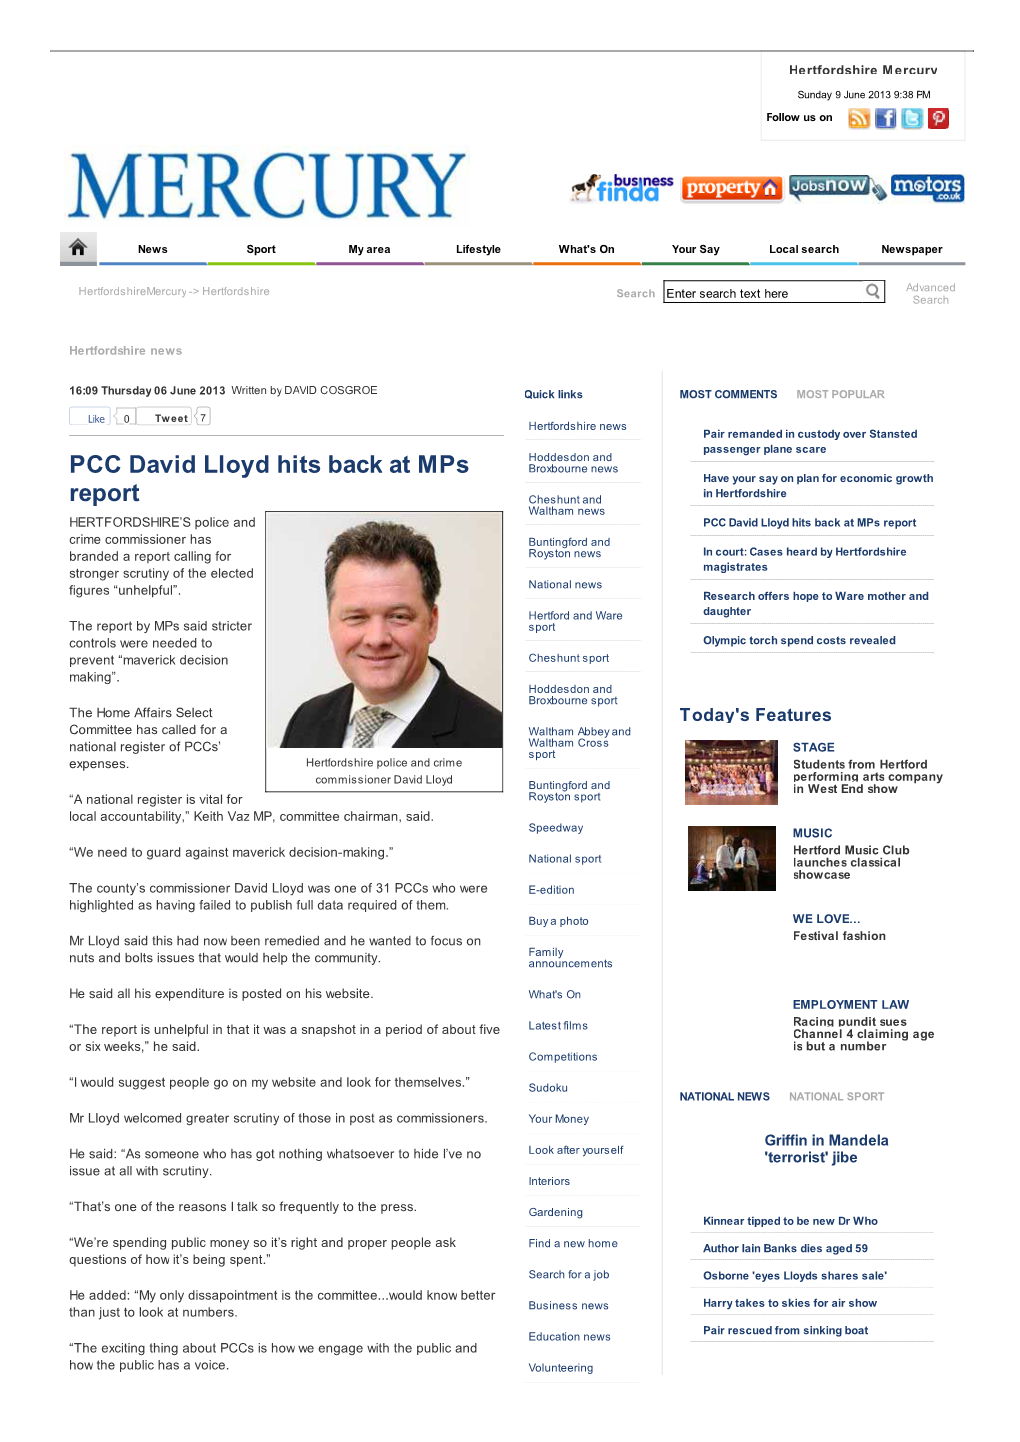 PCC David Lloyd Hits Back at Mps Report